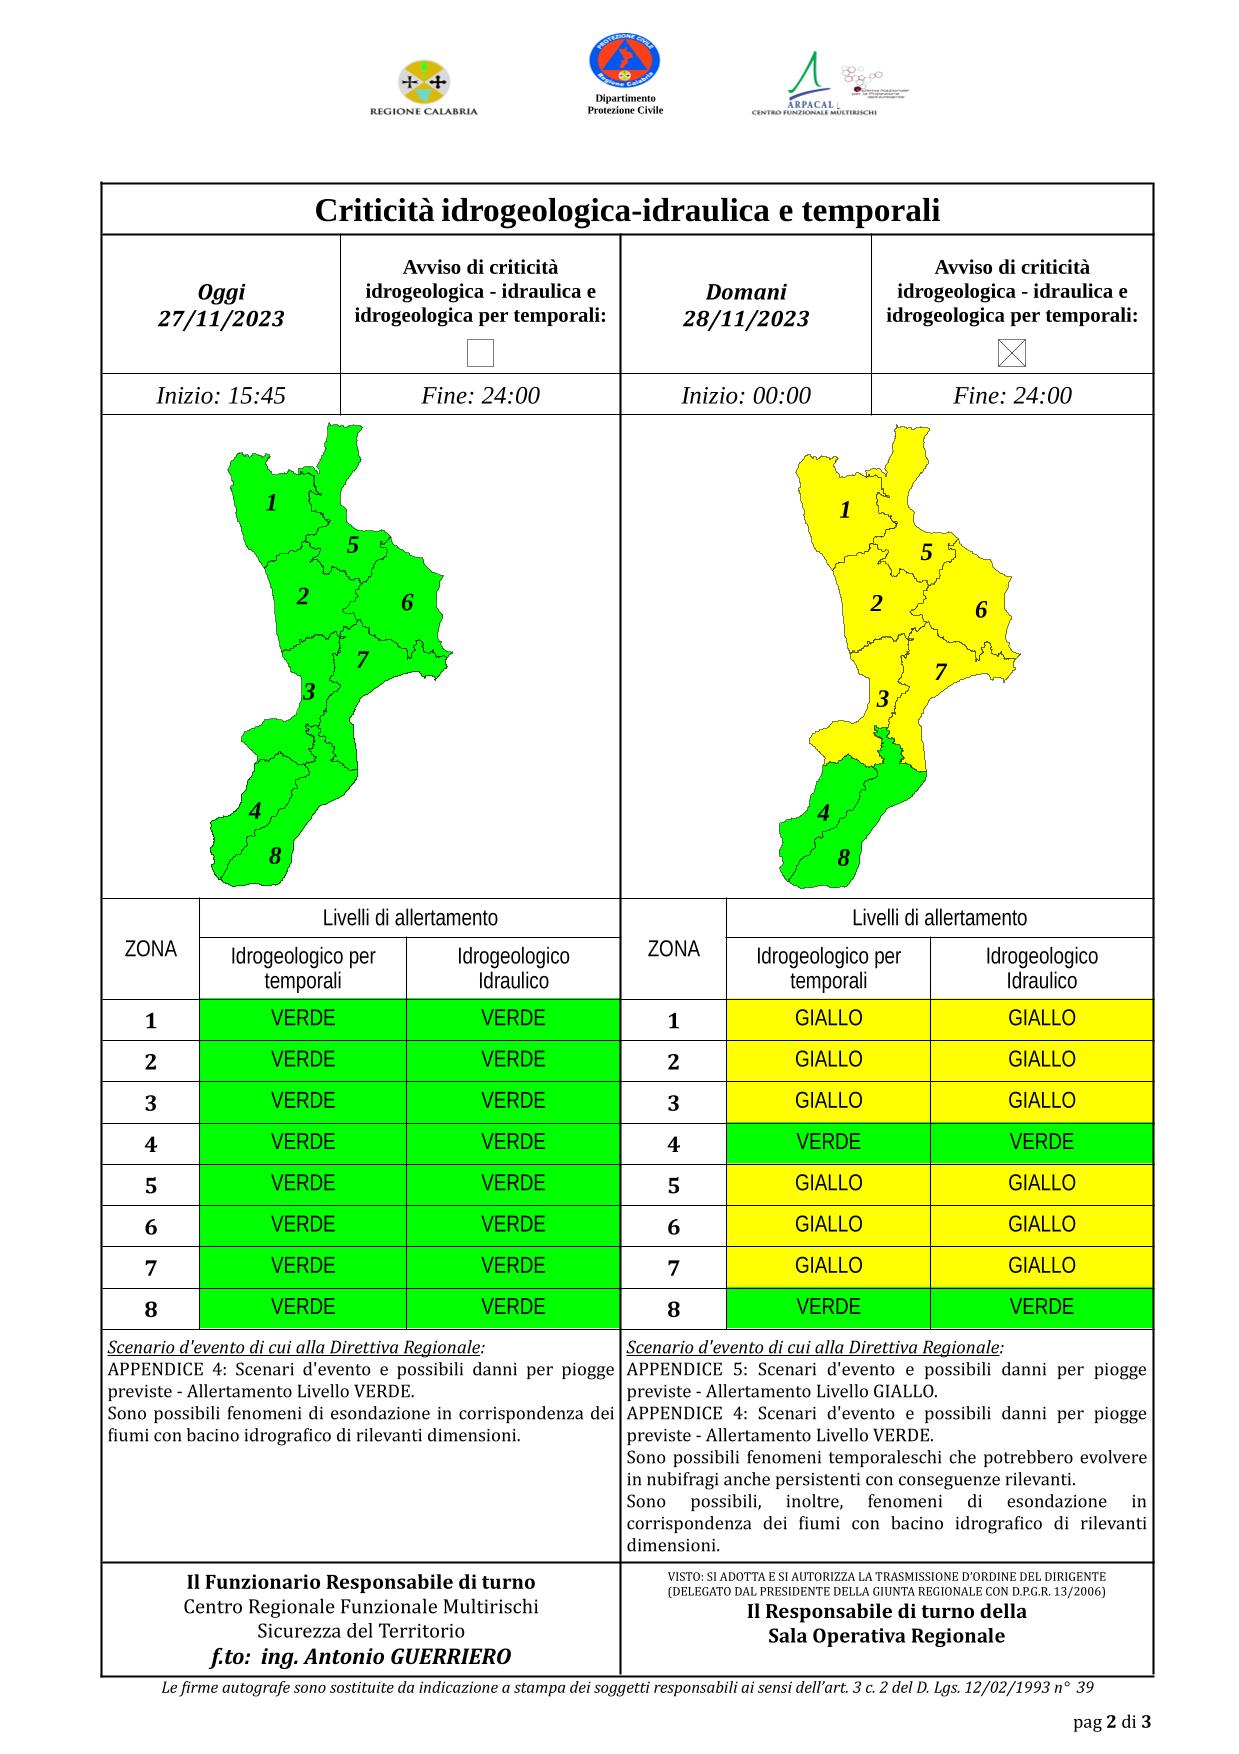 Criticità idrogeologica-idraulica e temporali in Calabria 27-11-2023